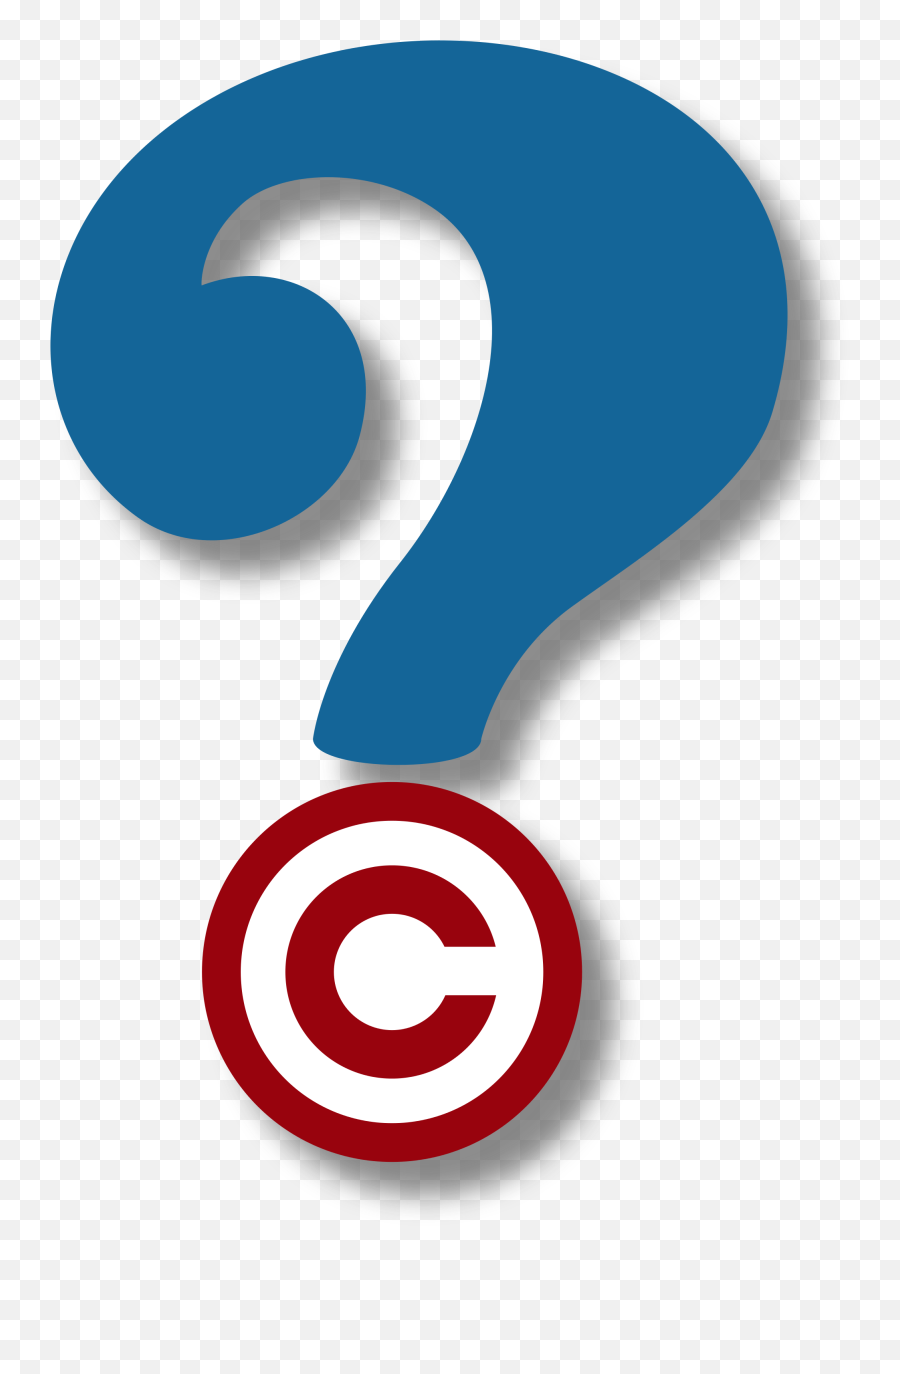 Download 768 Pixels - Copyright Question Mark Png Image With Question Mark Copyright Mark Emoji,Red Question Mark Png